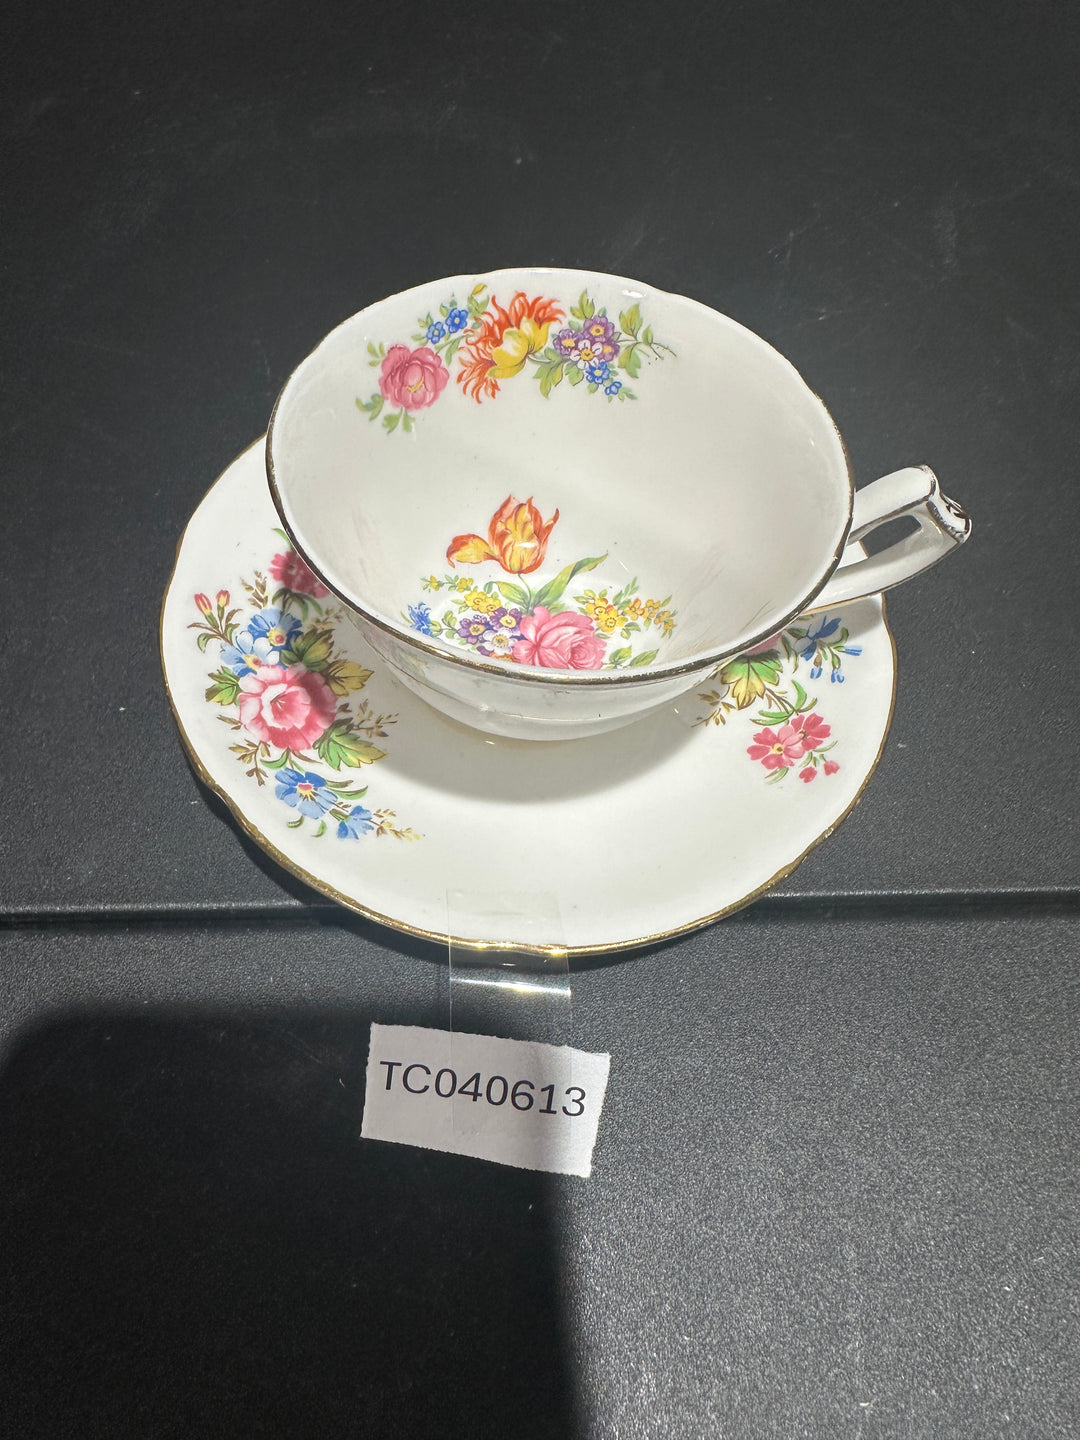 Tea Cup TC040613